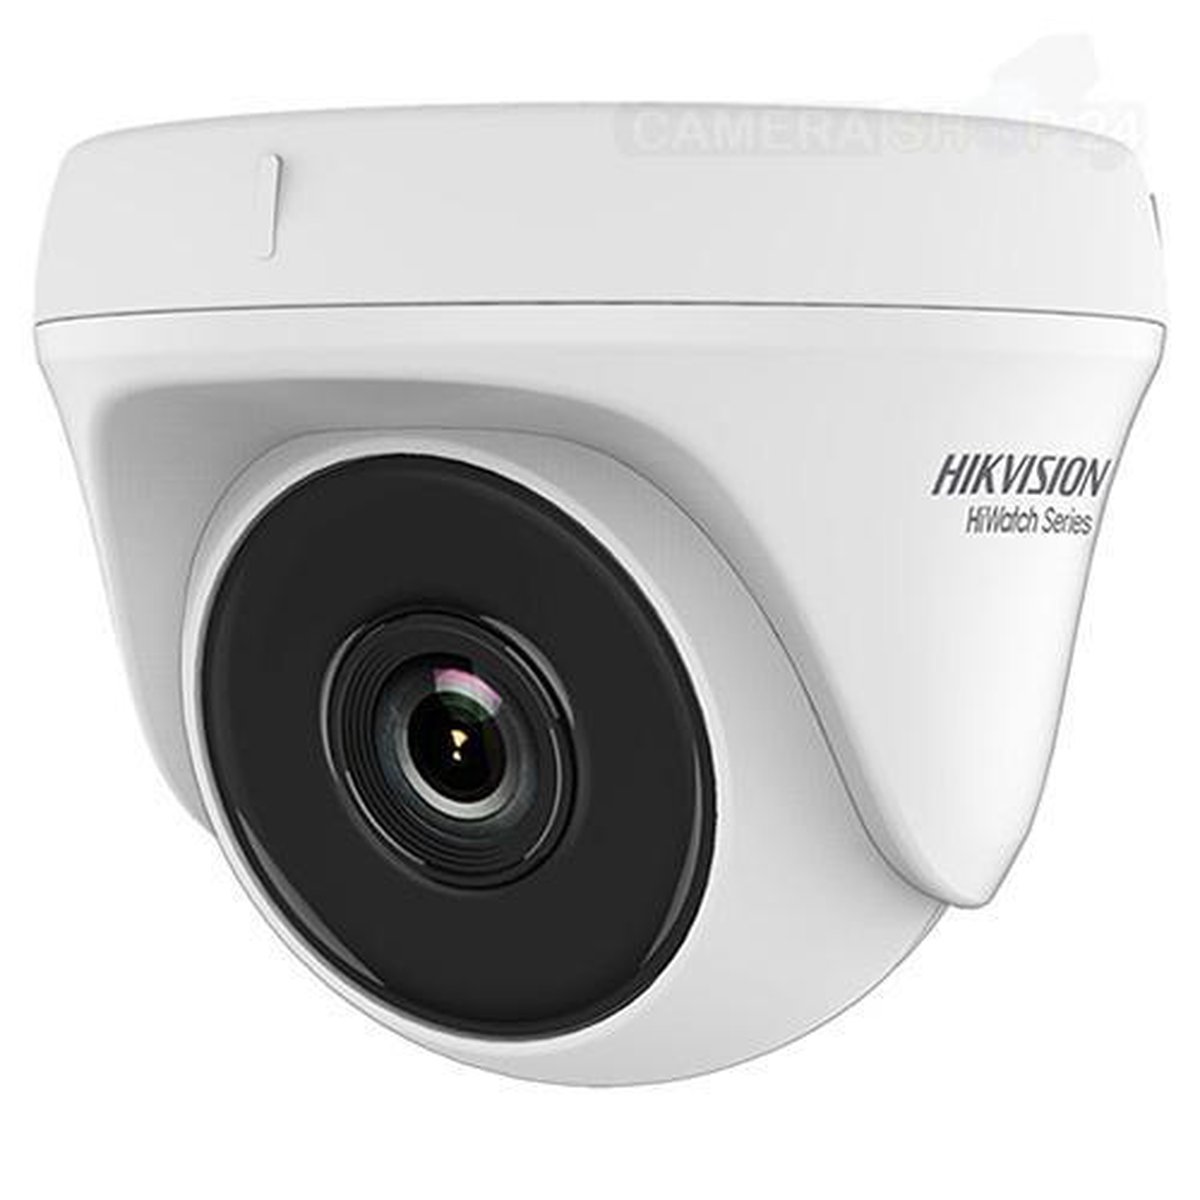 Hikvision Beveiligingscamera - HiWatch - Full HD - TVI, CVI, Analoog, AHD - Binnencamera - Nachtzicht 20m - 2.8mm Lens - Dome Klein Formaat